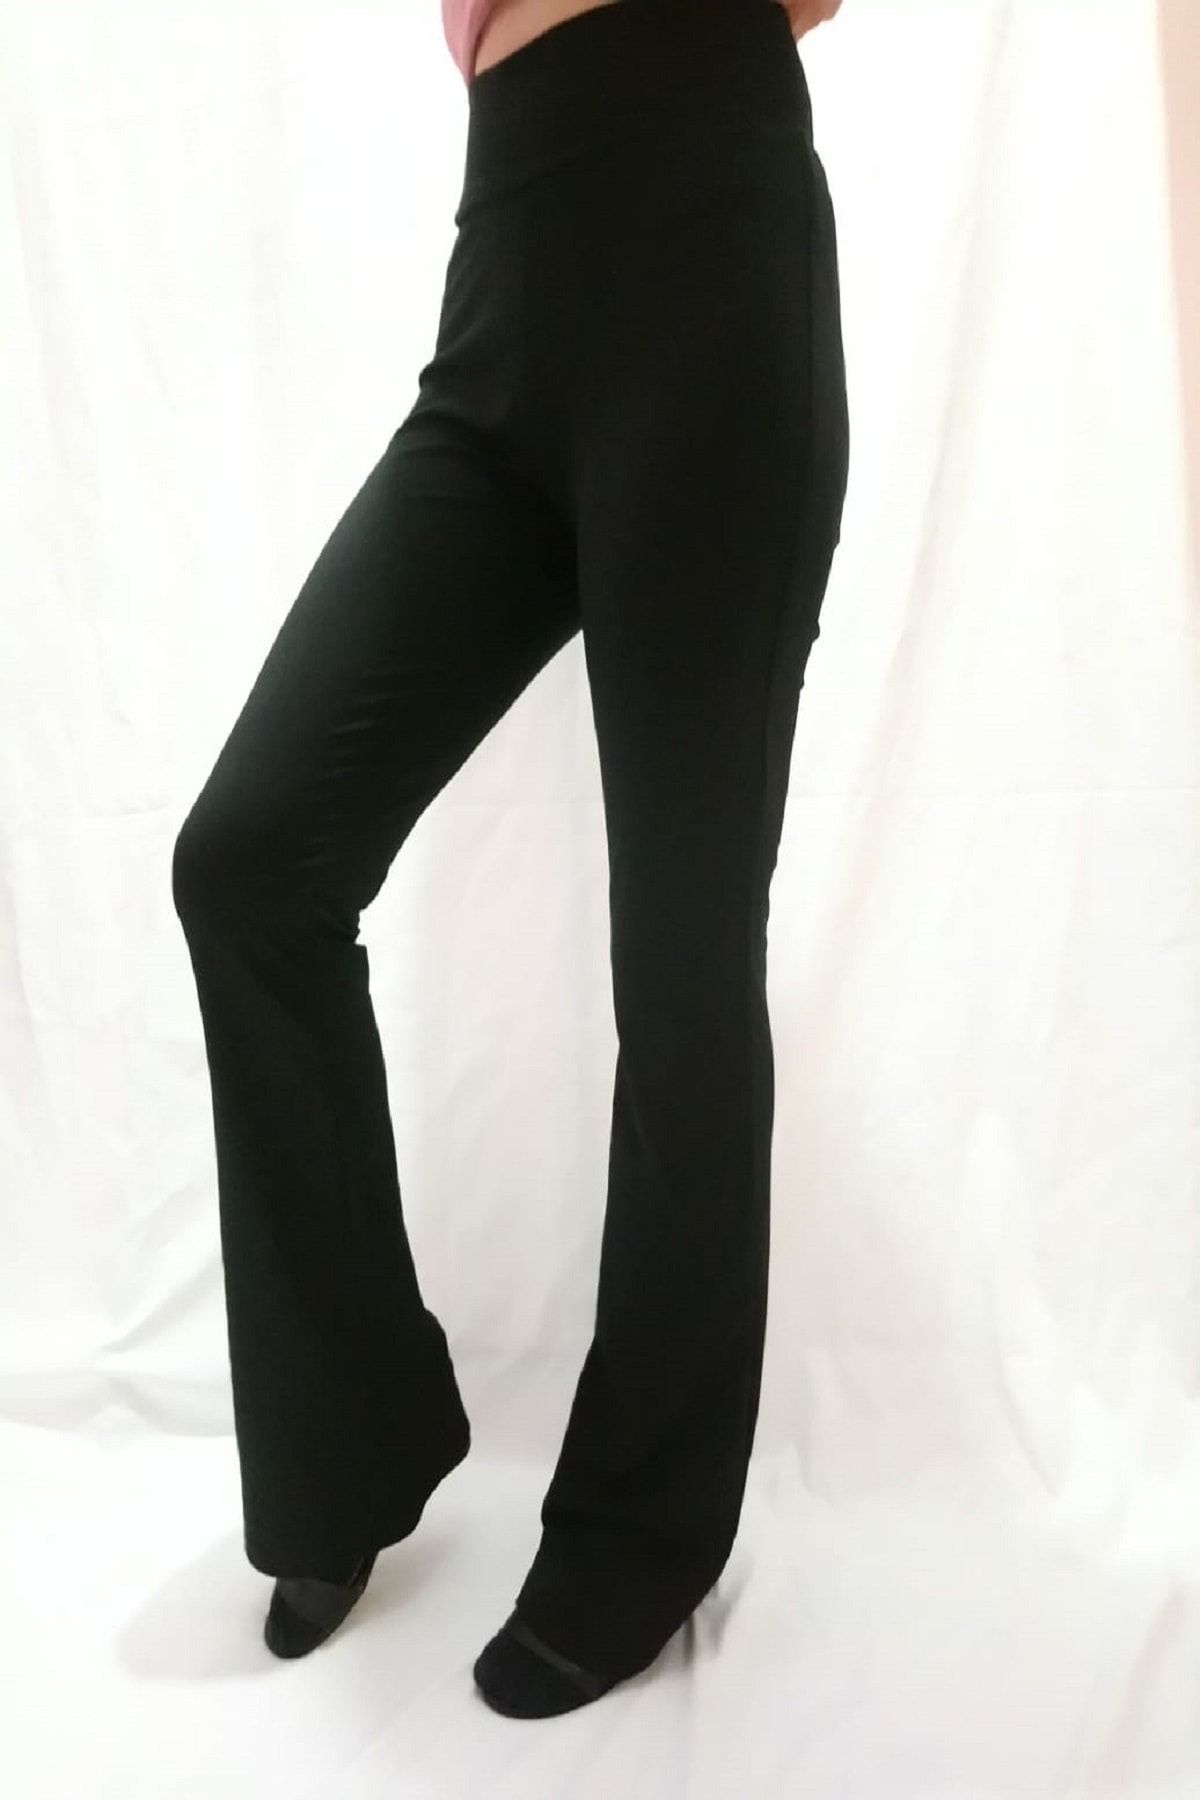 Modoo Tekstil Kadın Siyah Yüksel Bel İspanyol Paça Pantolon